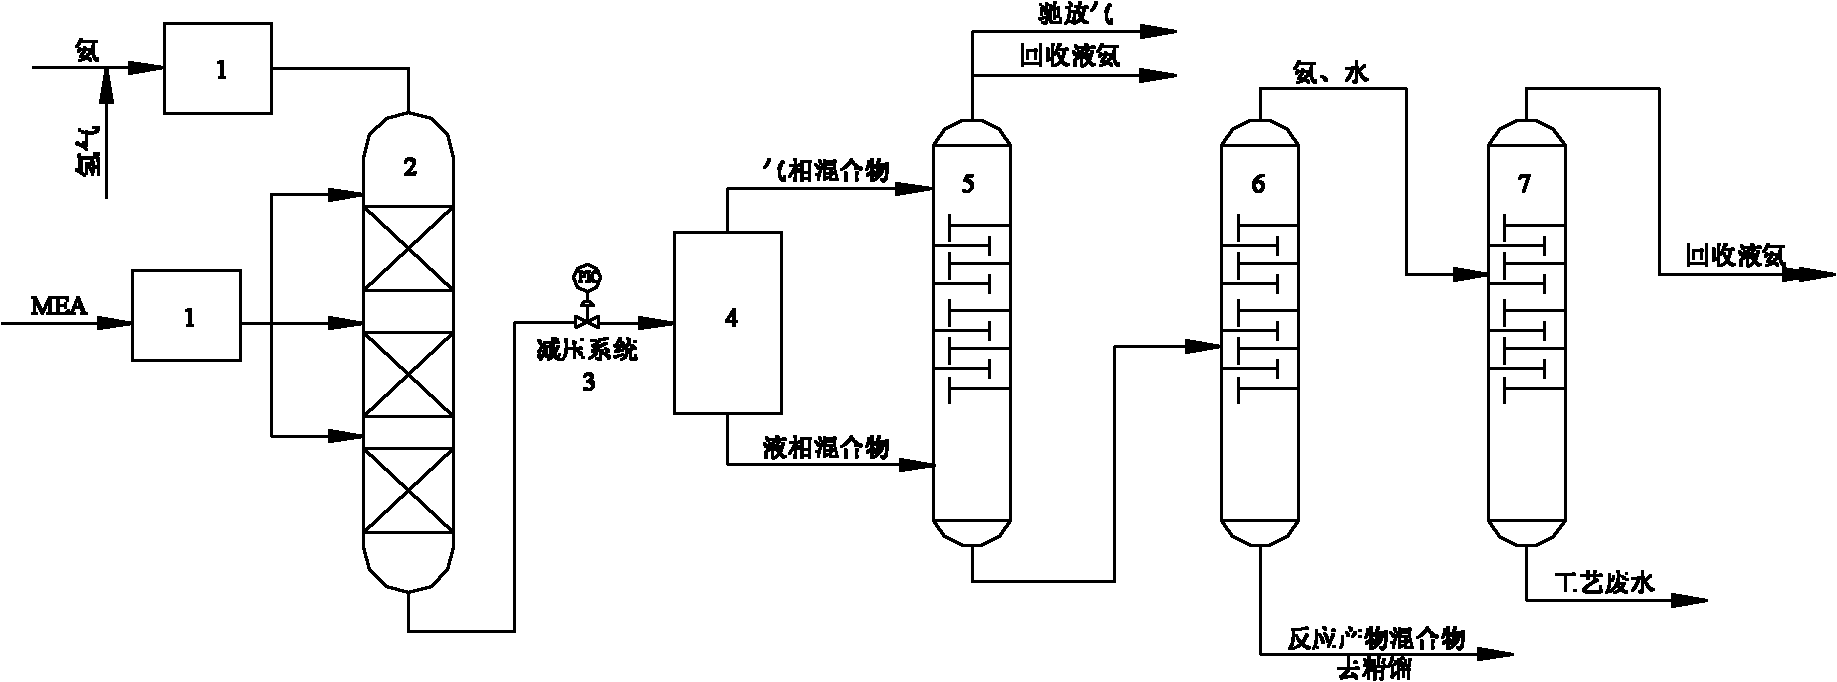 A method for preparing ethylenediamine by using ethanolamine and ammonia as raw materials